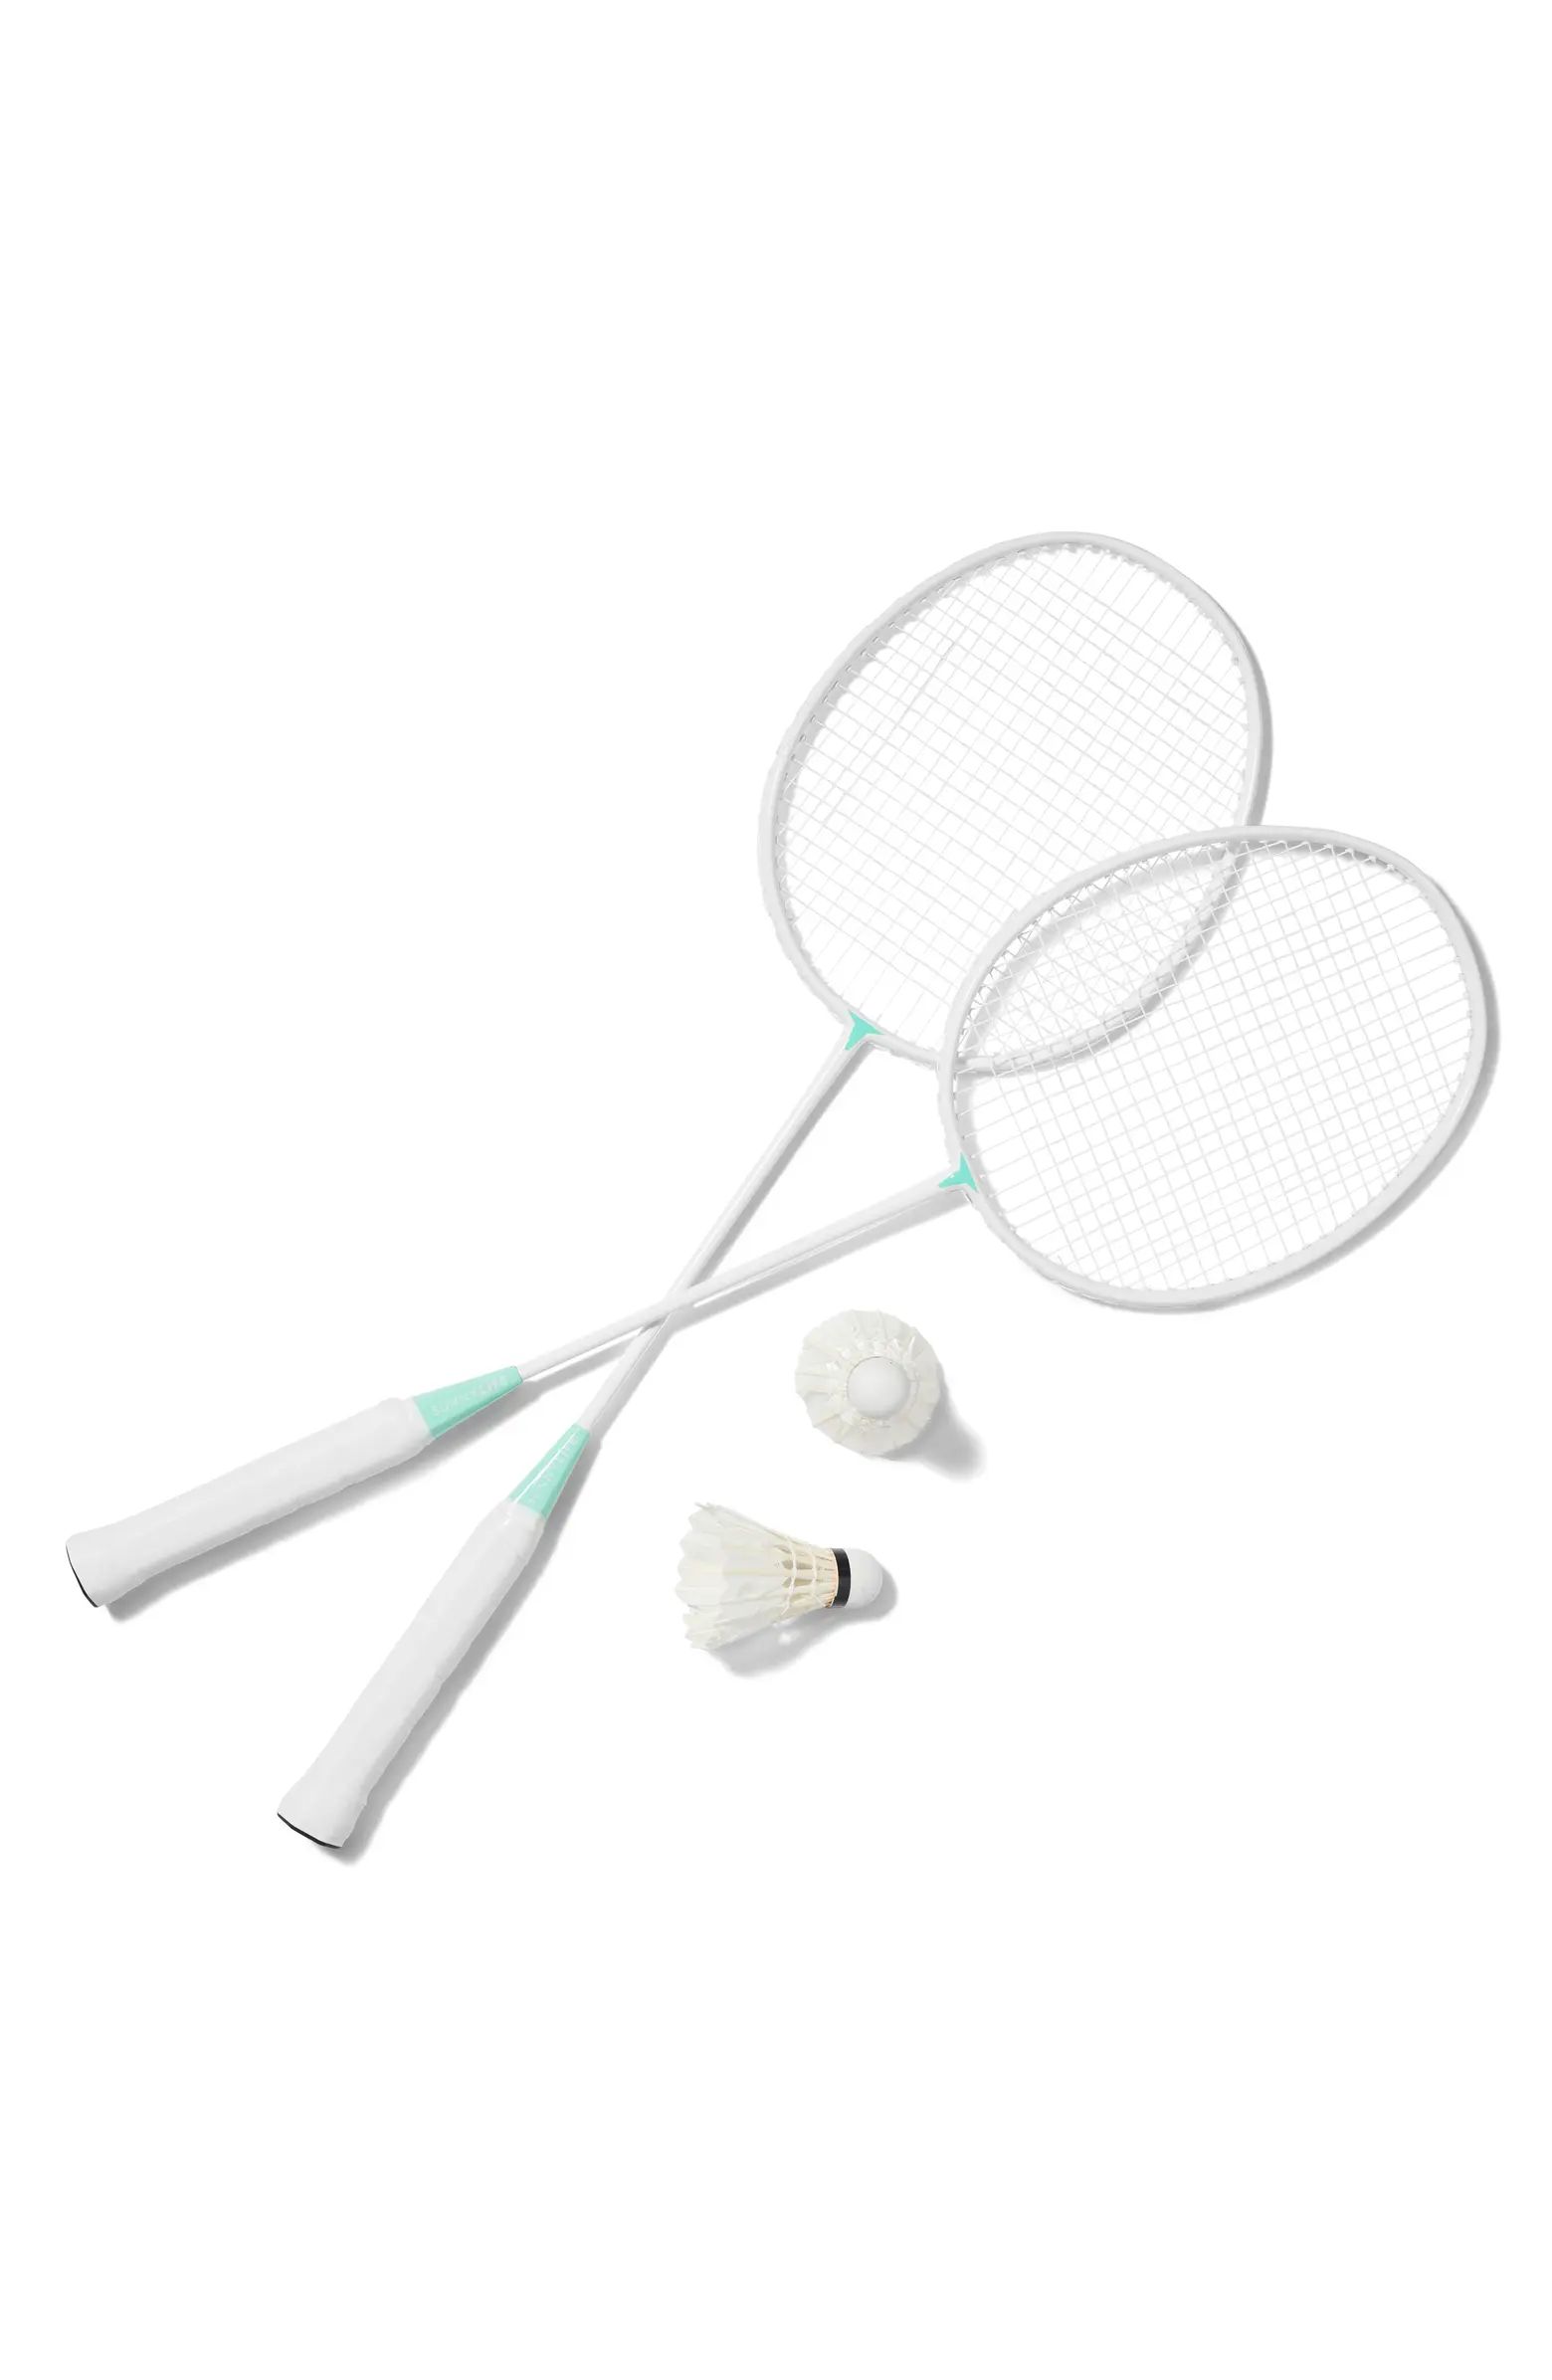 Badminton Set | Nordstrom